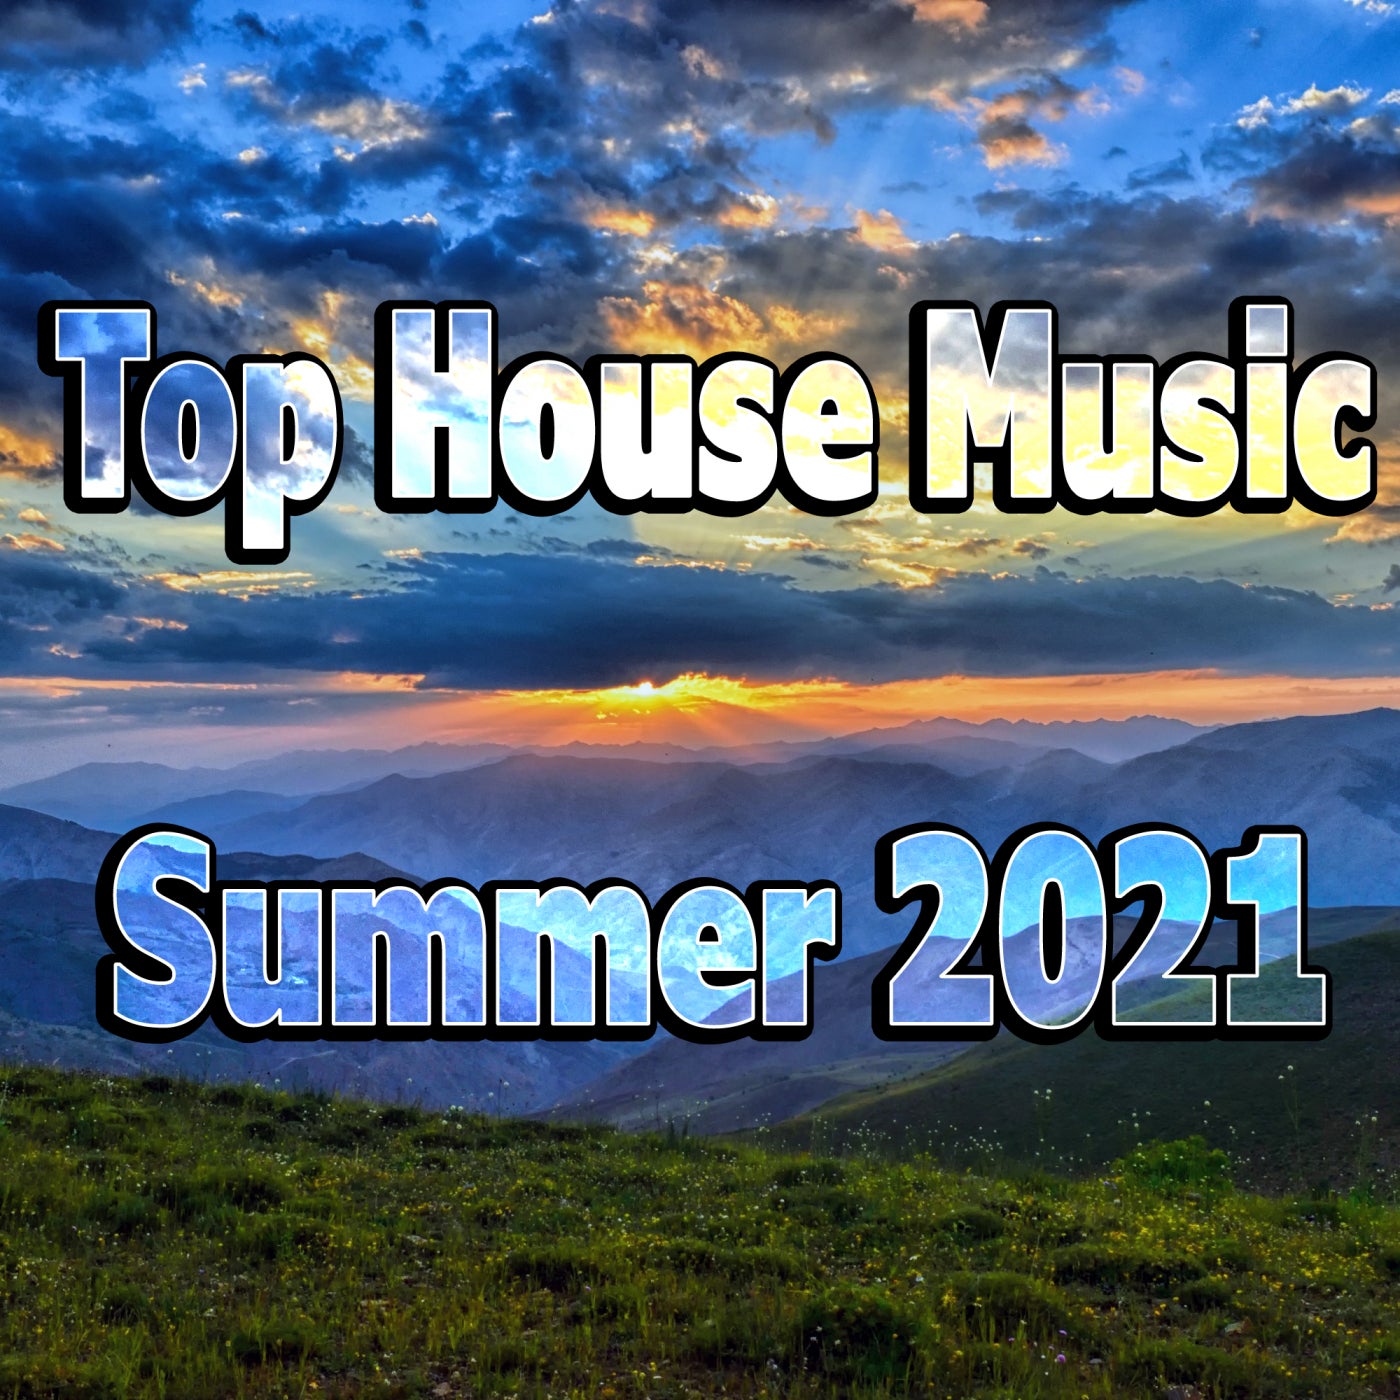 Top House Music Summer 2021